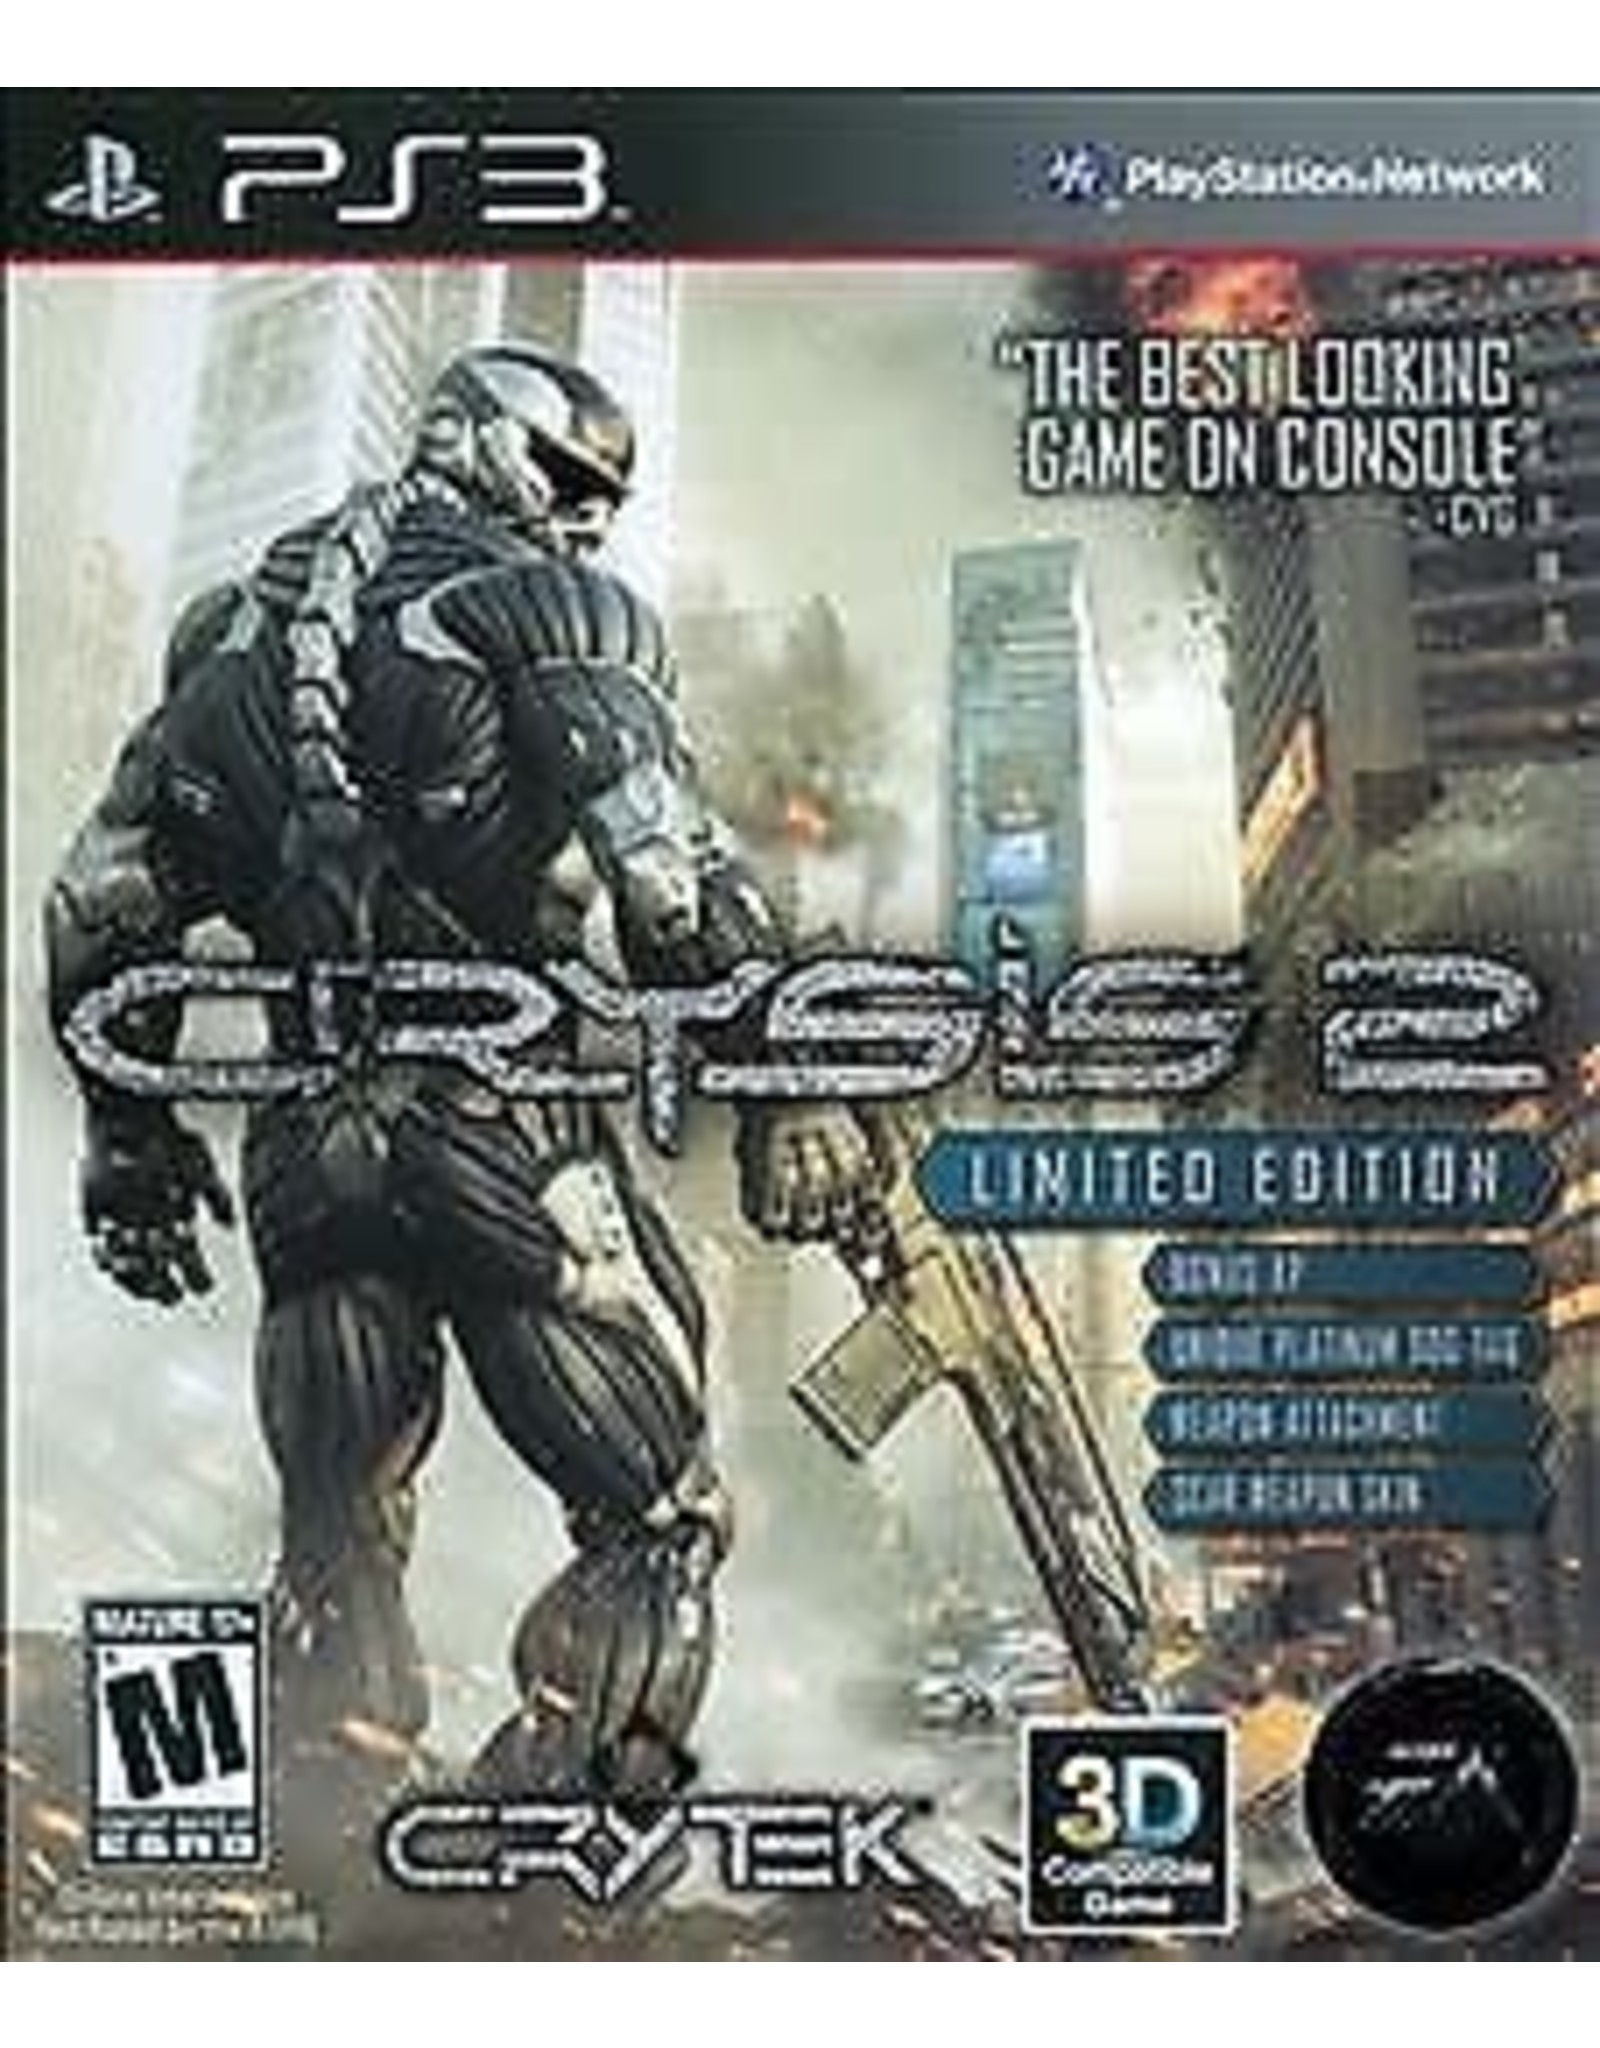 Playstation 3 Crysis 2: Limited Edition (No Manual or DLC)